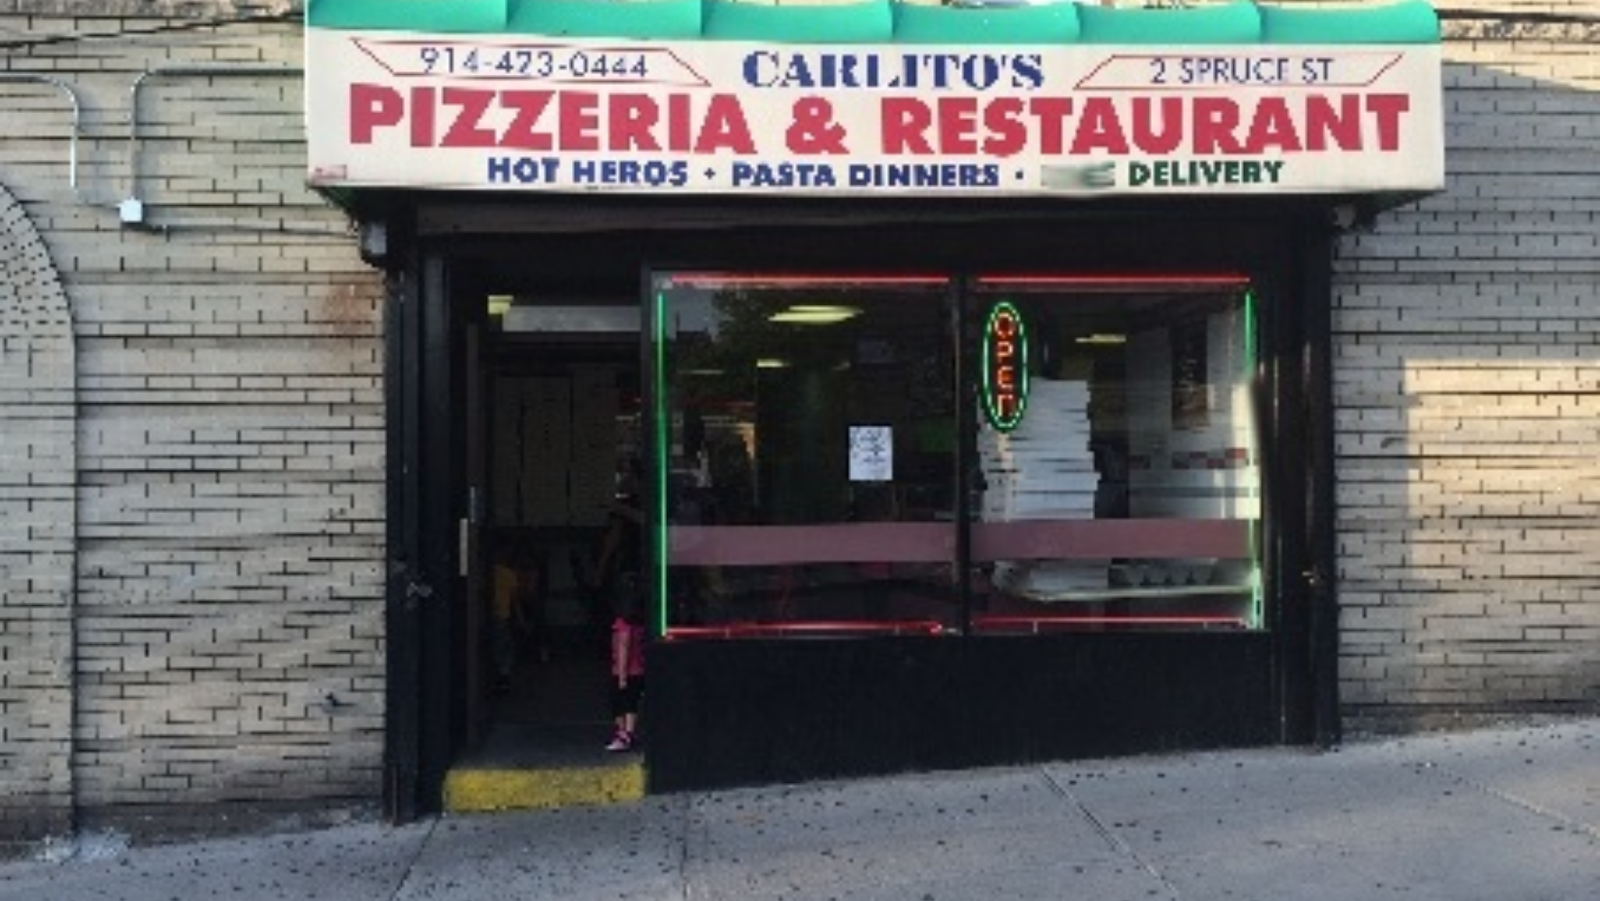 Carlito's Pizzeria Restaurant